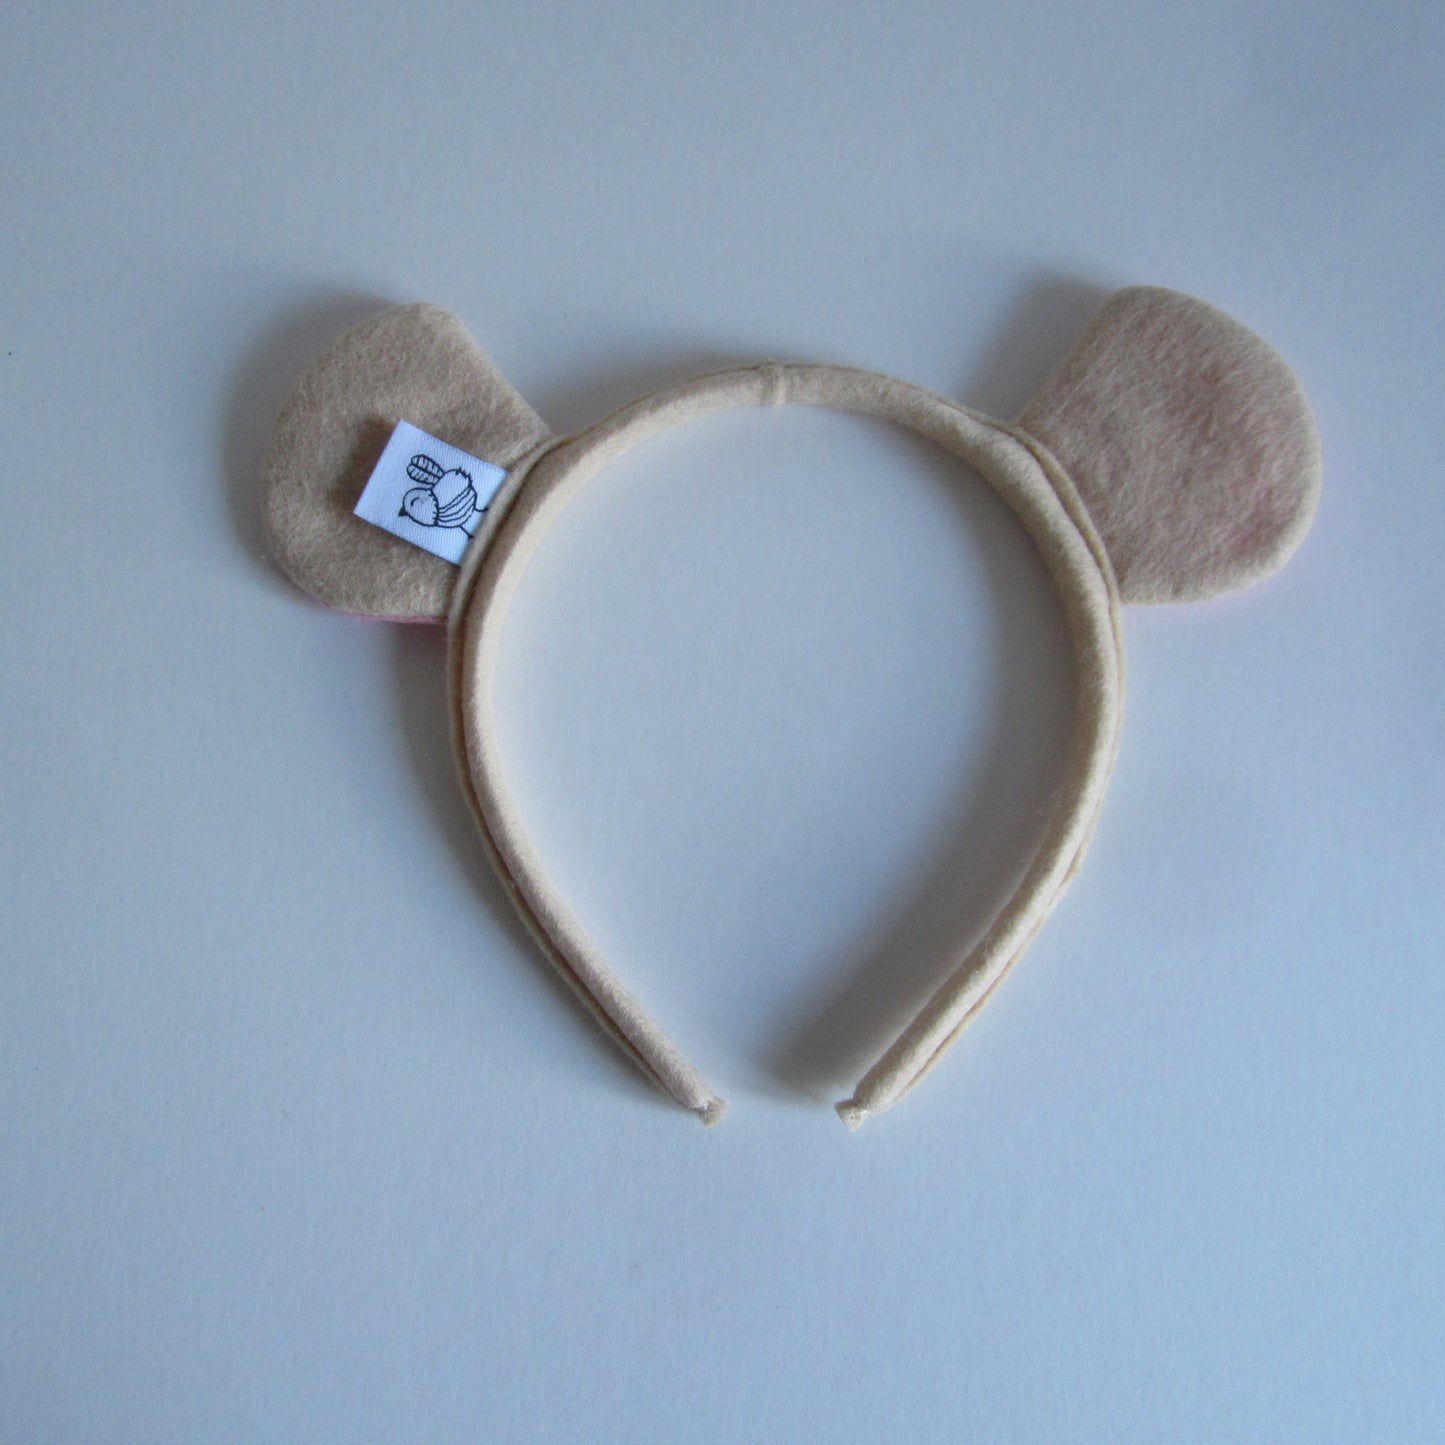 Mouse Eared Hairband Made of Fawn Coloured Felt